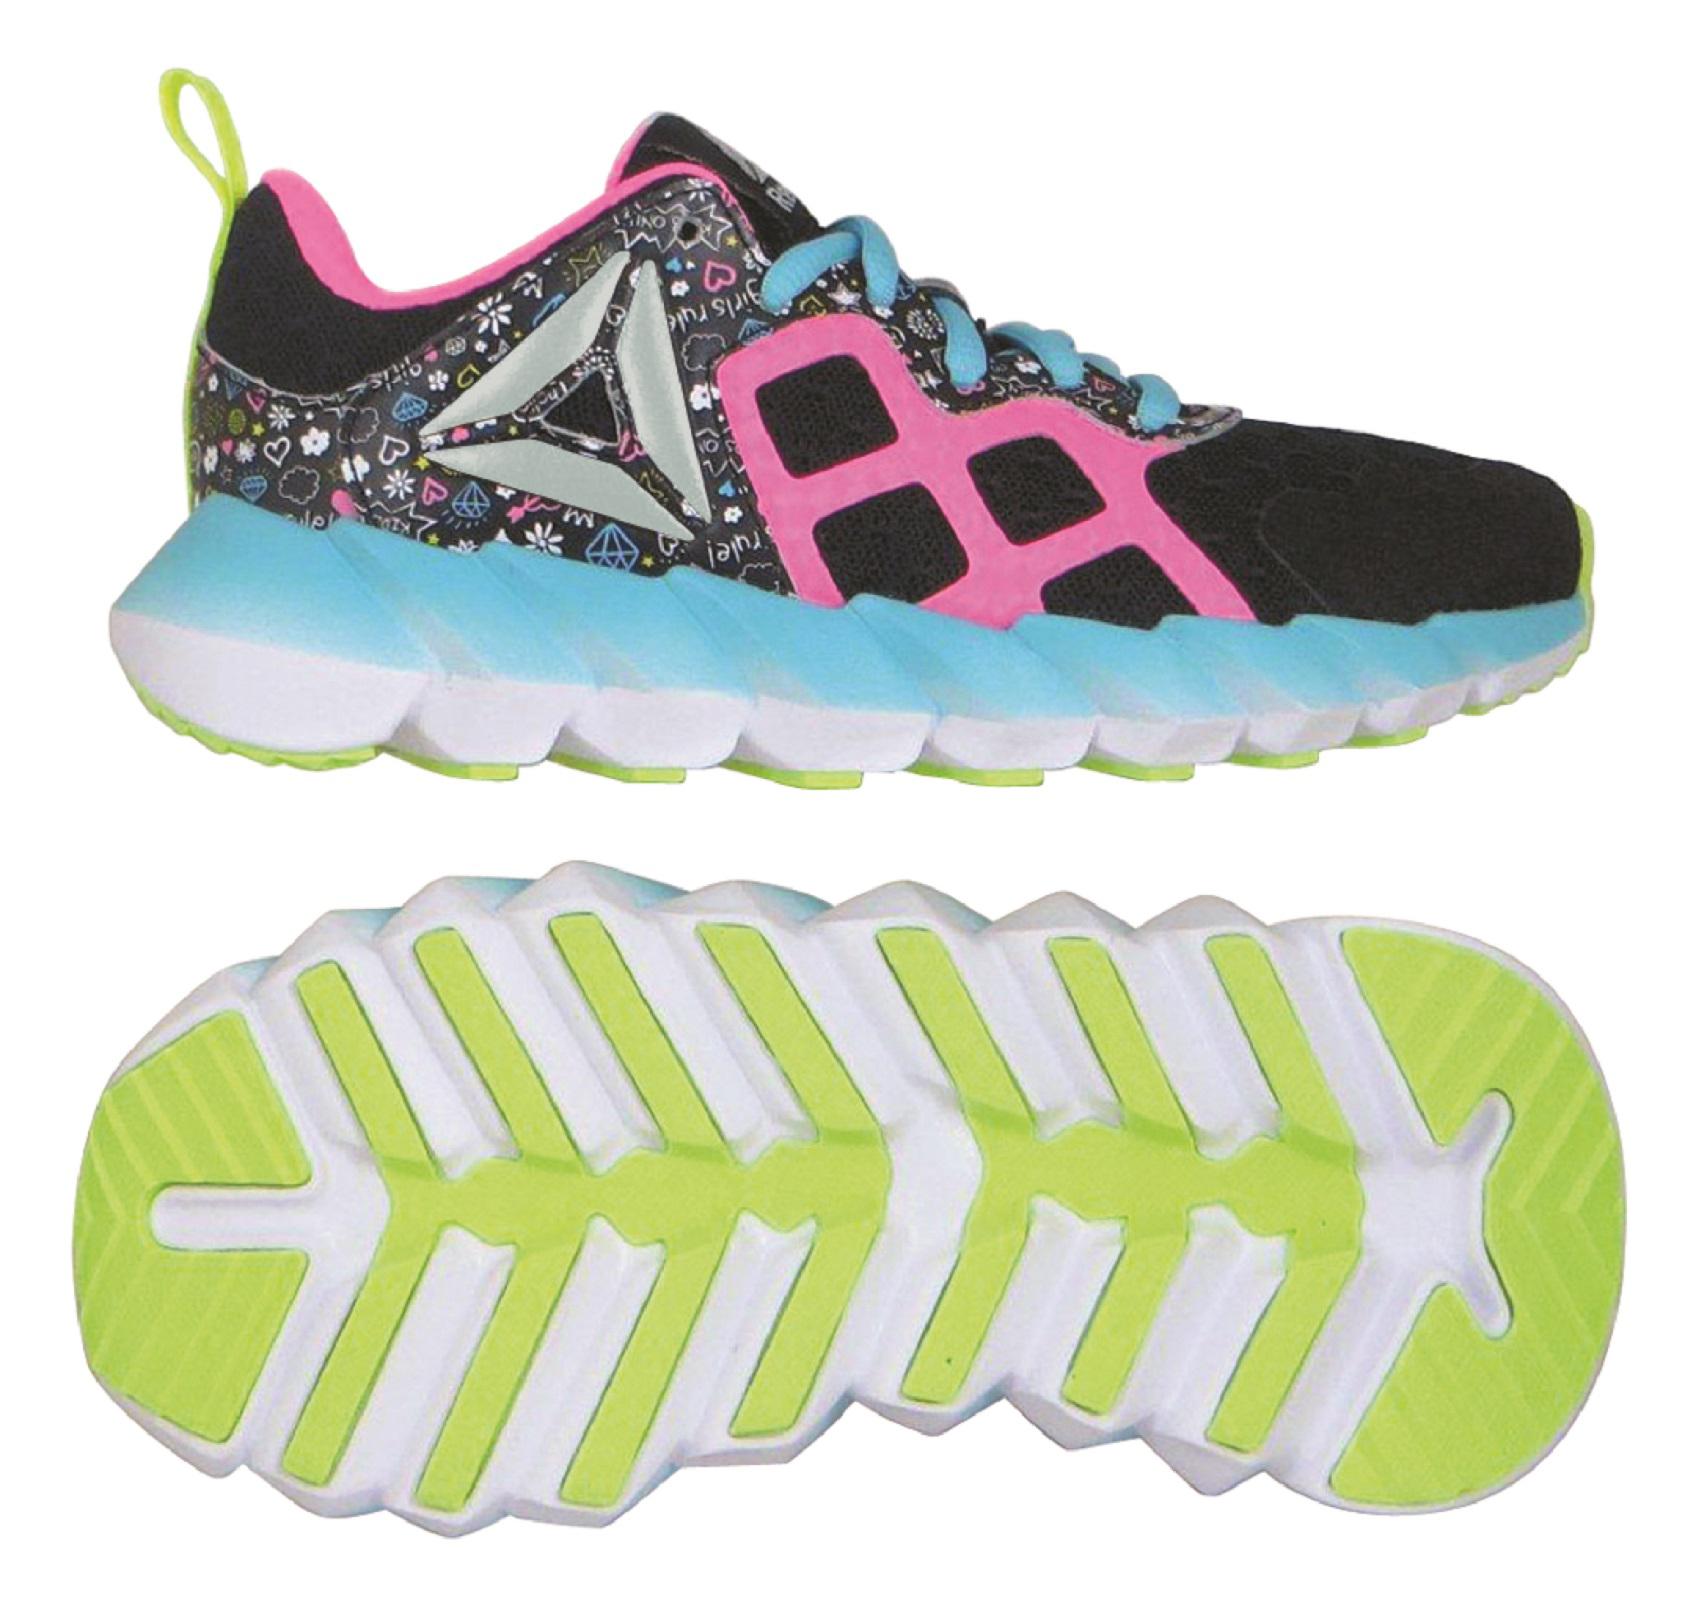 Reebok Girl's Exocage Black/Pink/Blue Athletic Shoe